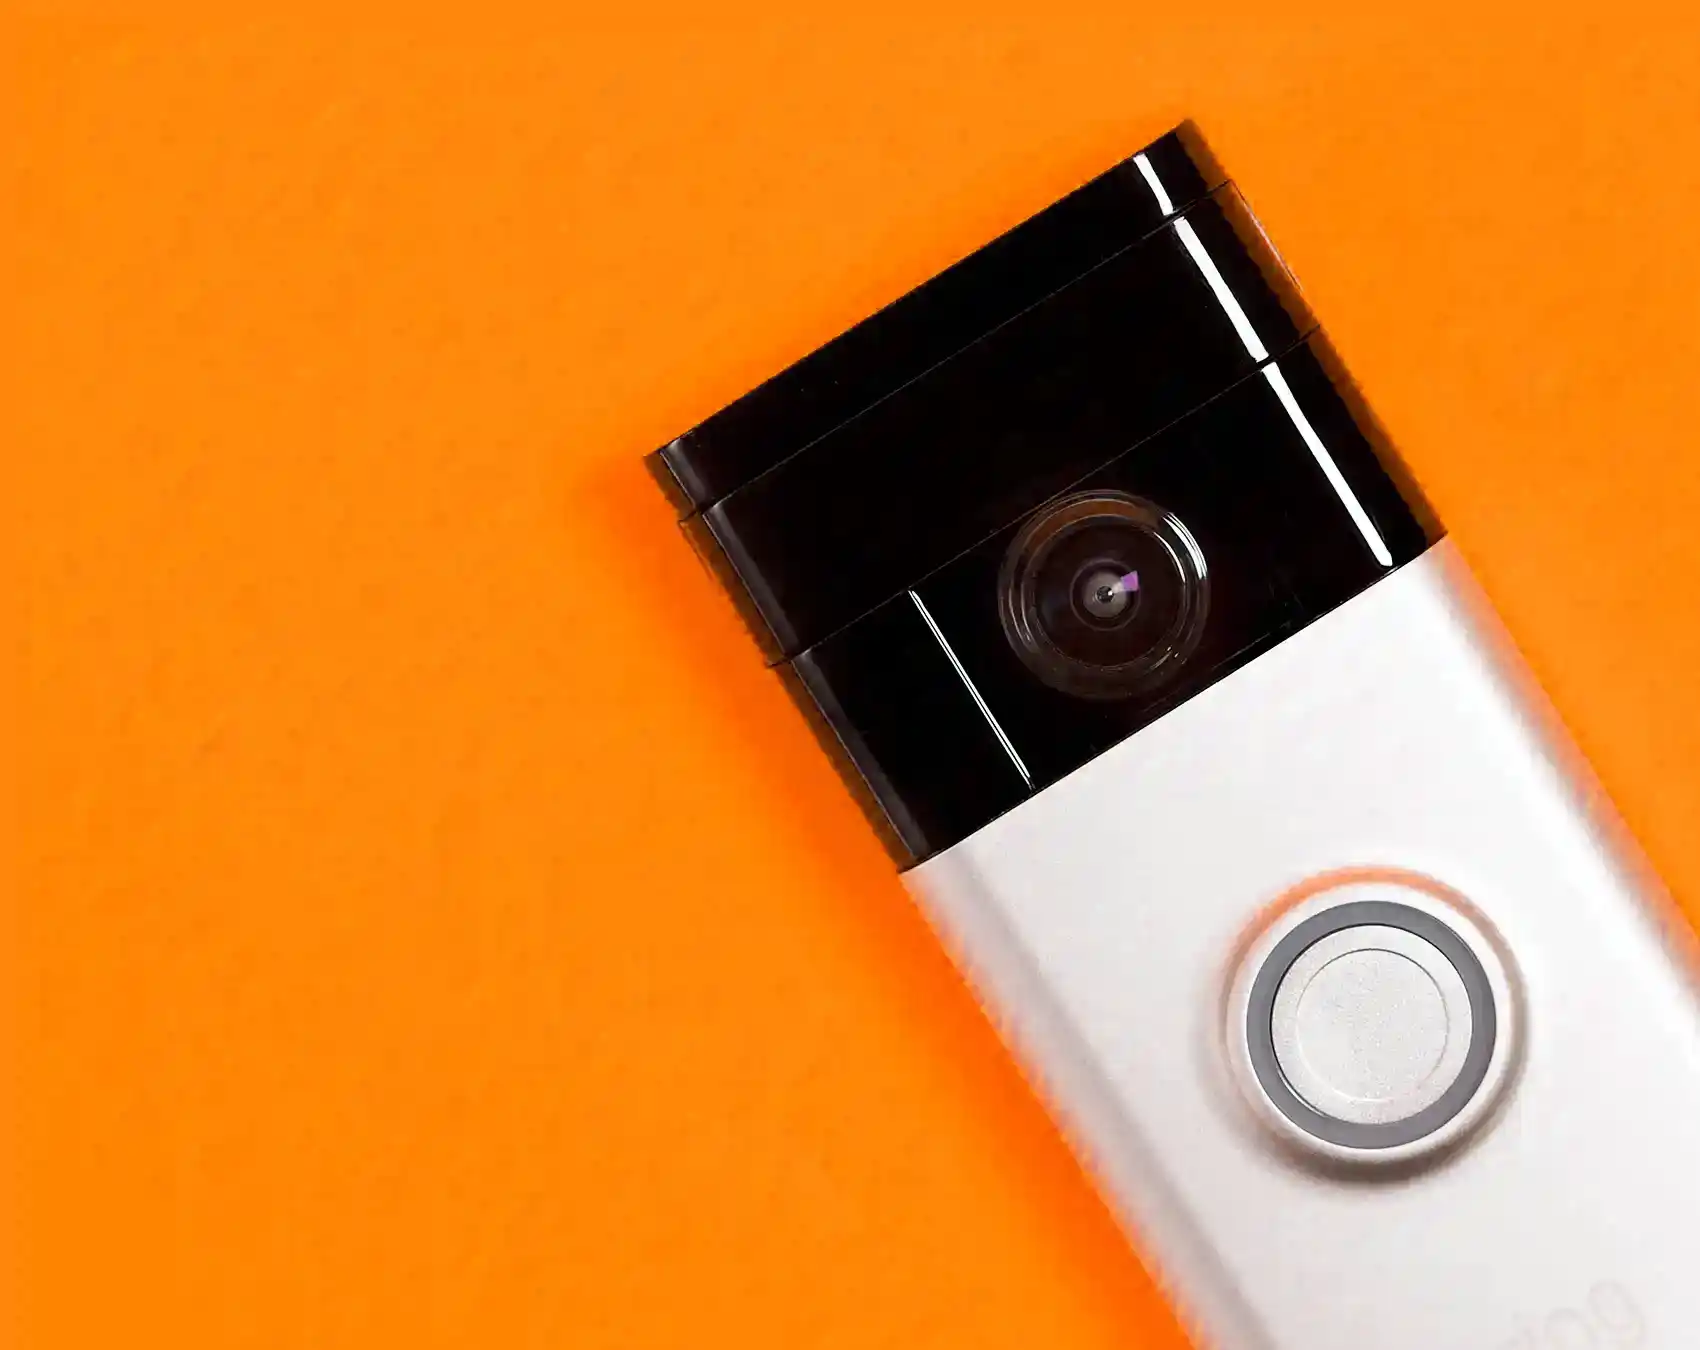 closeup of Ring doorbell on an orange background 1.0